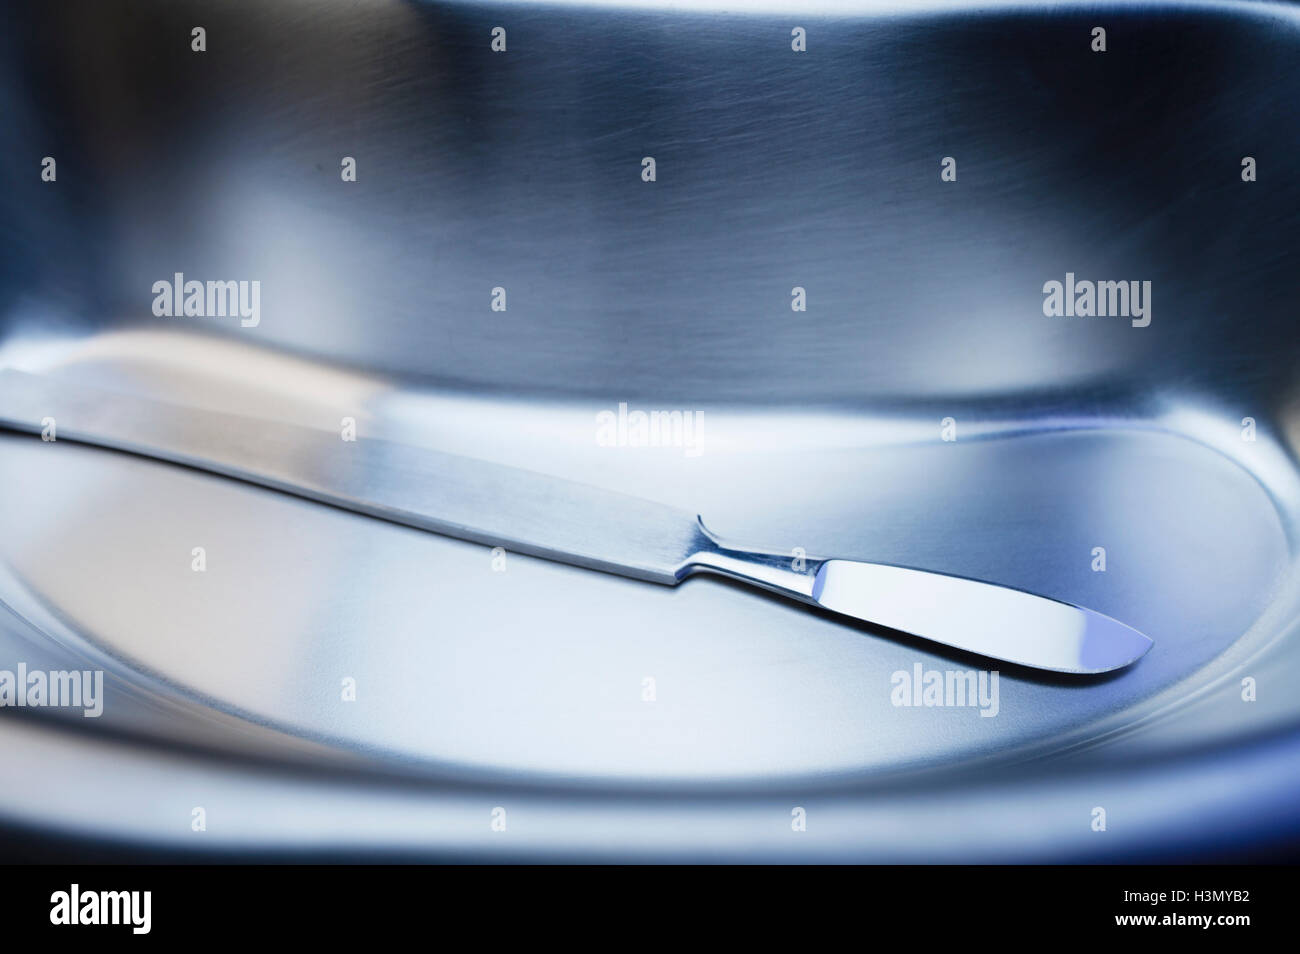 Scalpel in stainless steel kidney dish Stock Photo